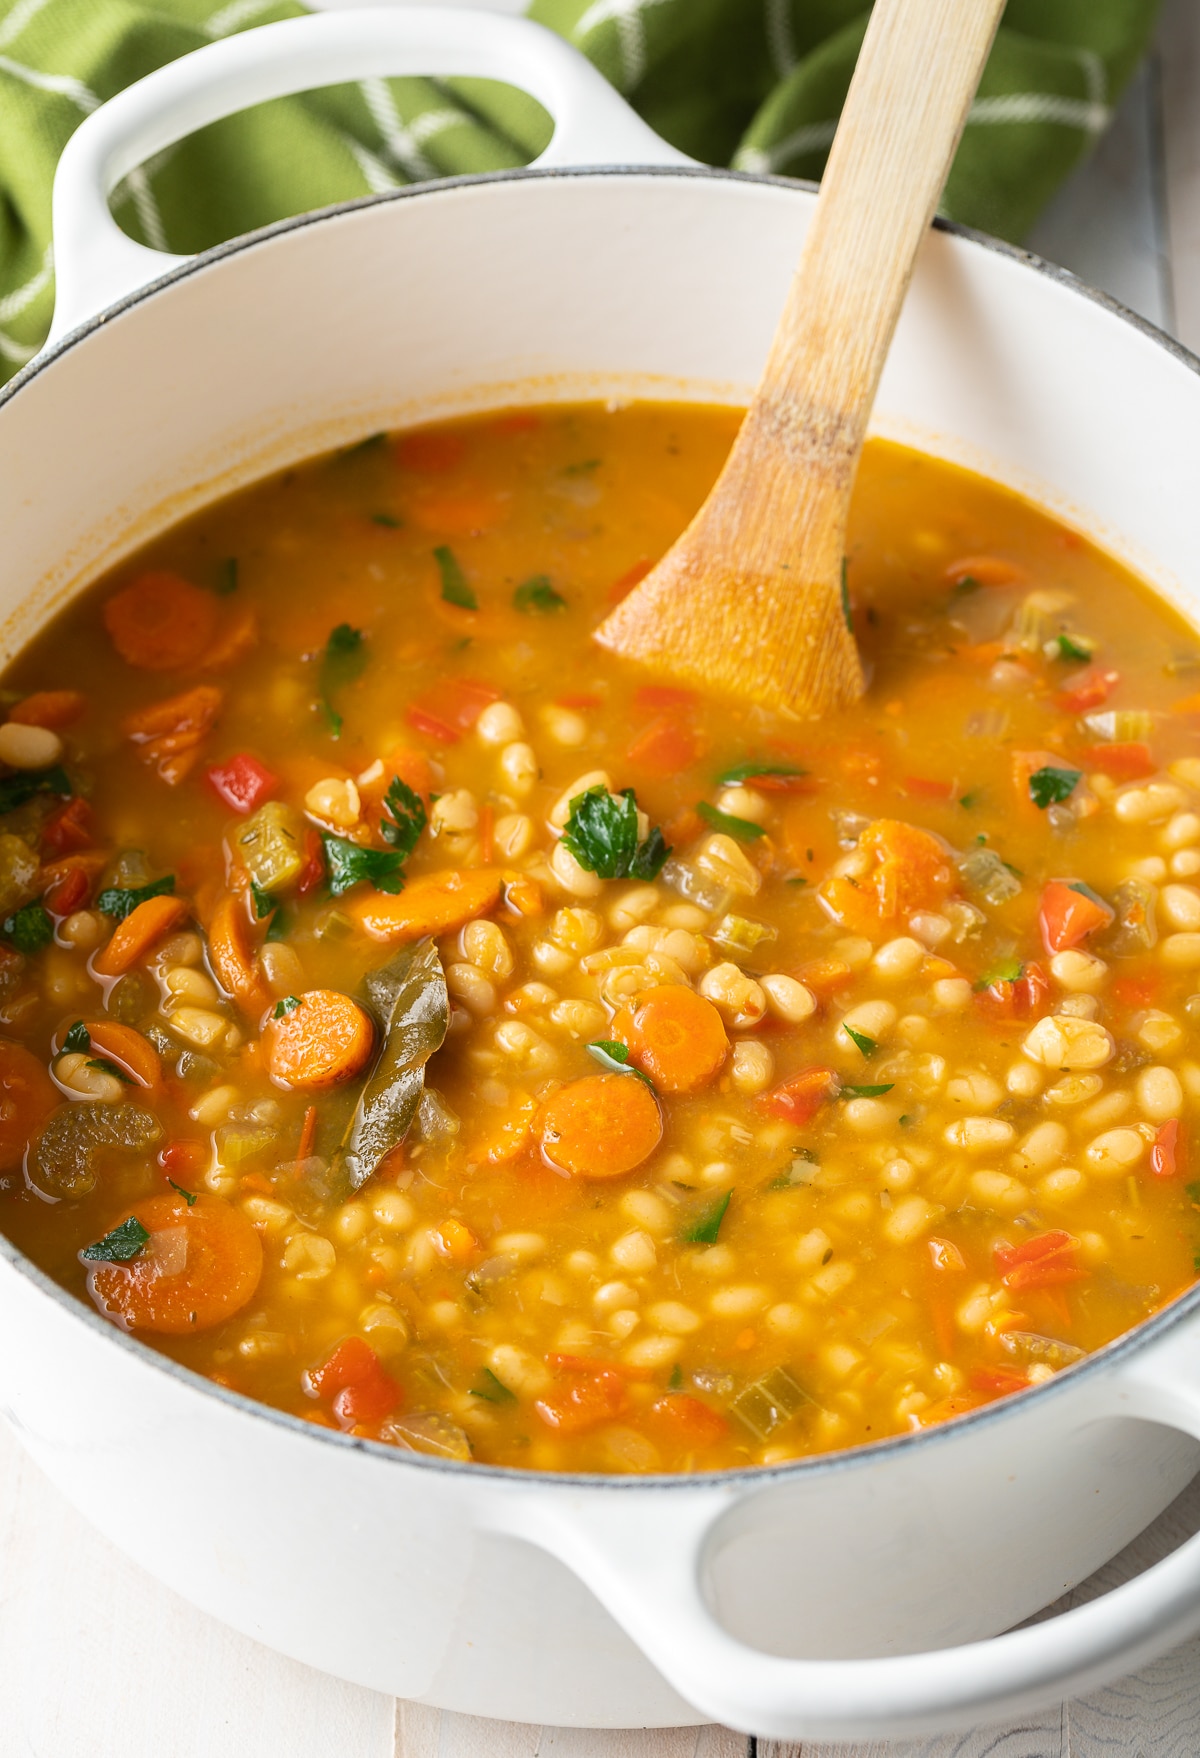 Best vegan navy bean soup recipe #ASpicyPerspective #vegetarian #vegan # soy #soup #glutenfree #dairyfree